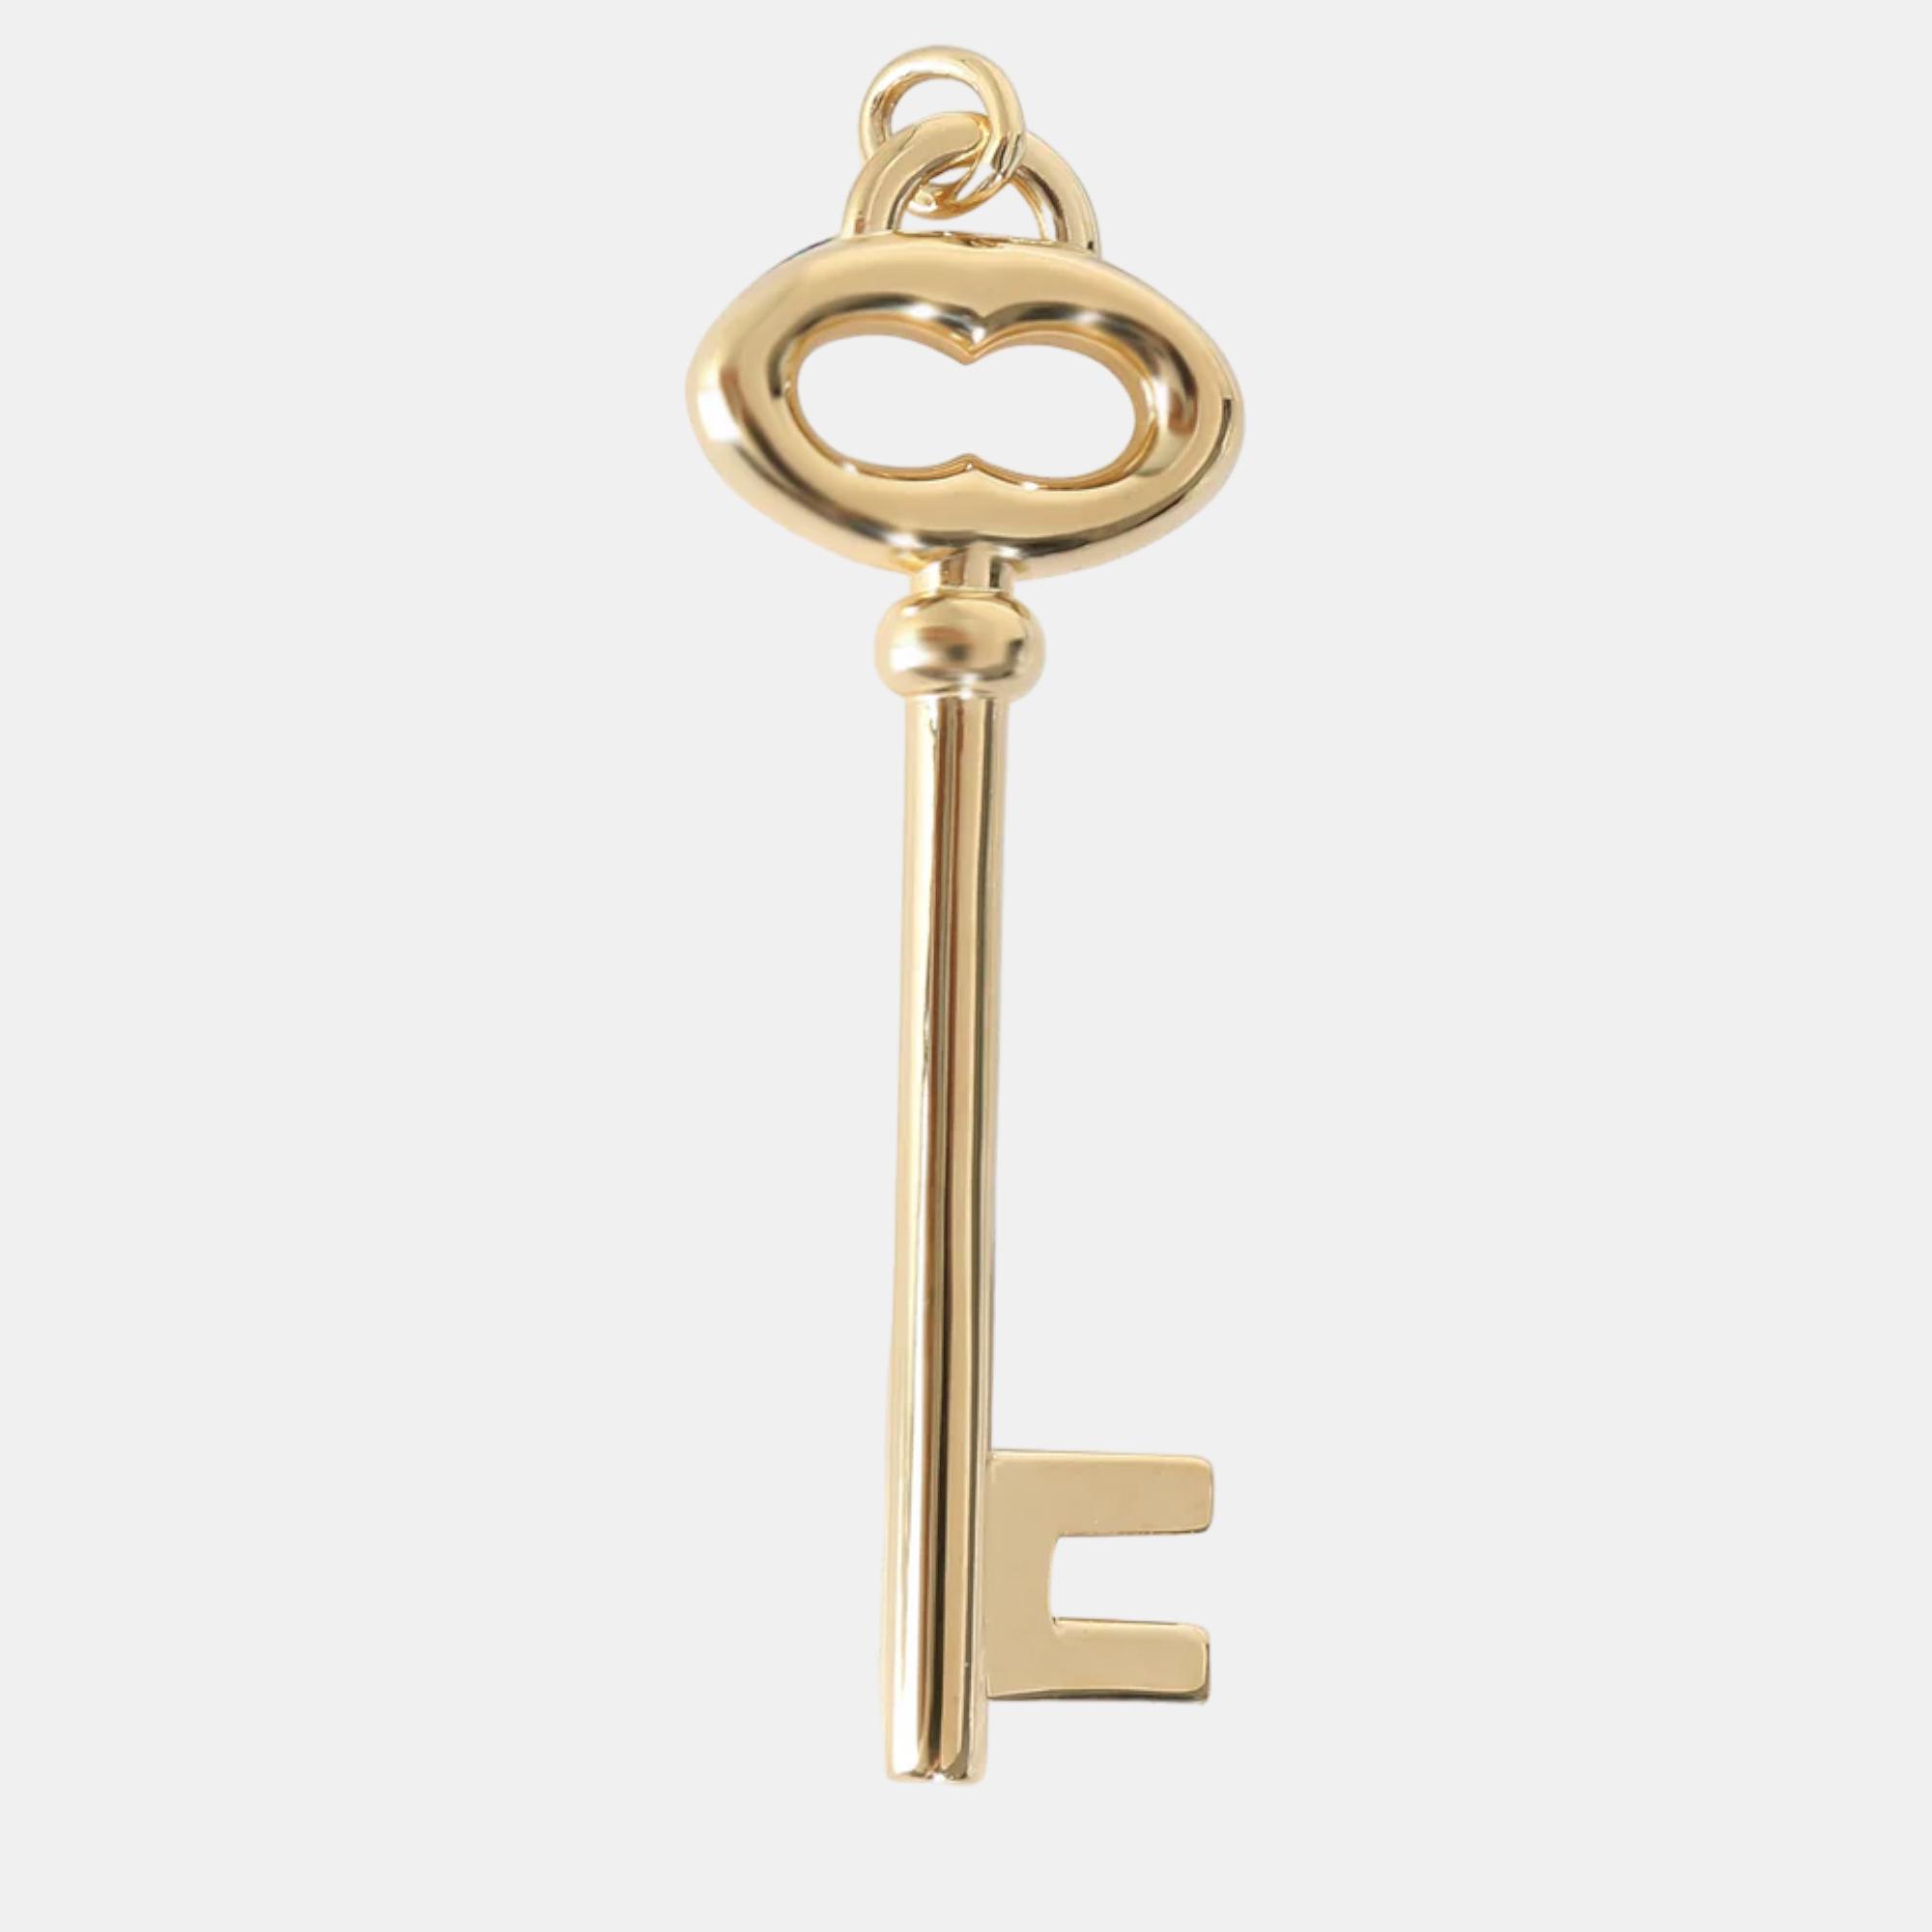 Tiffany & co. 18k yellow gold key fashion pendant